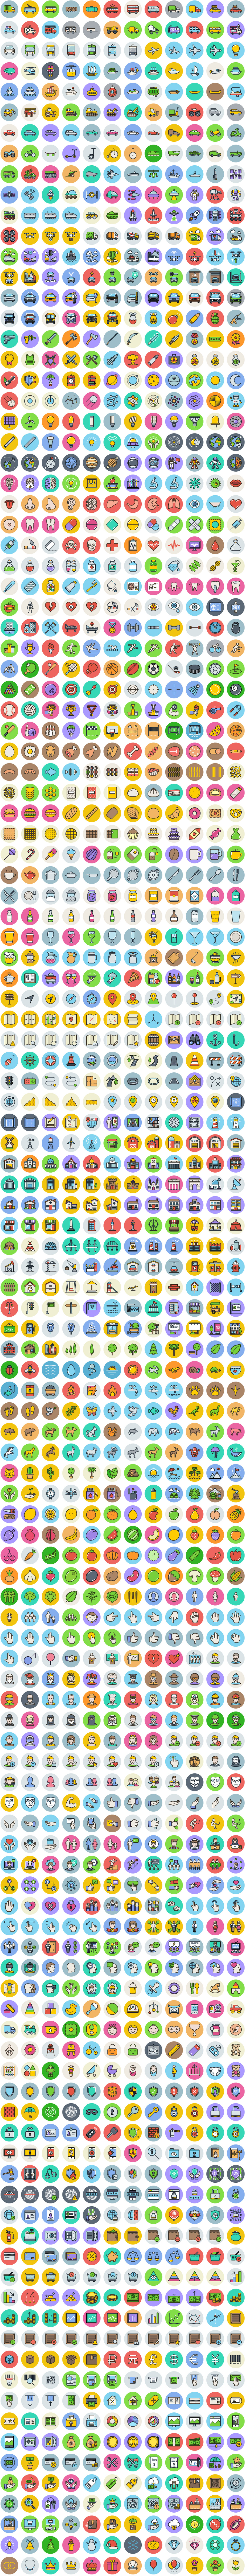 Unigrid Flat icons full 1